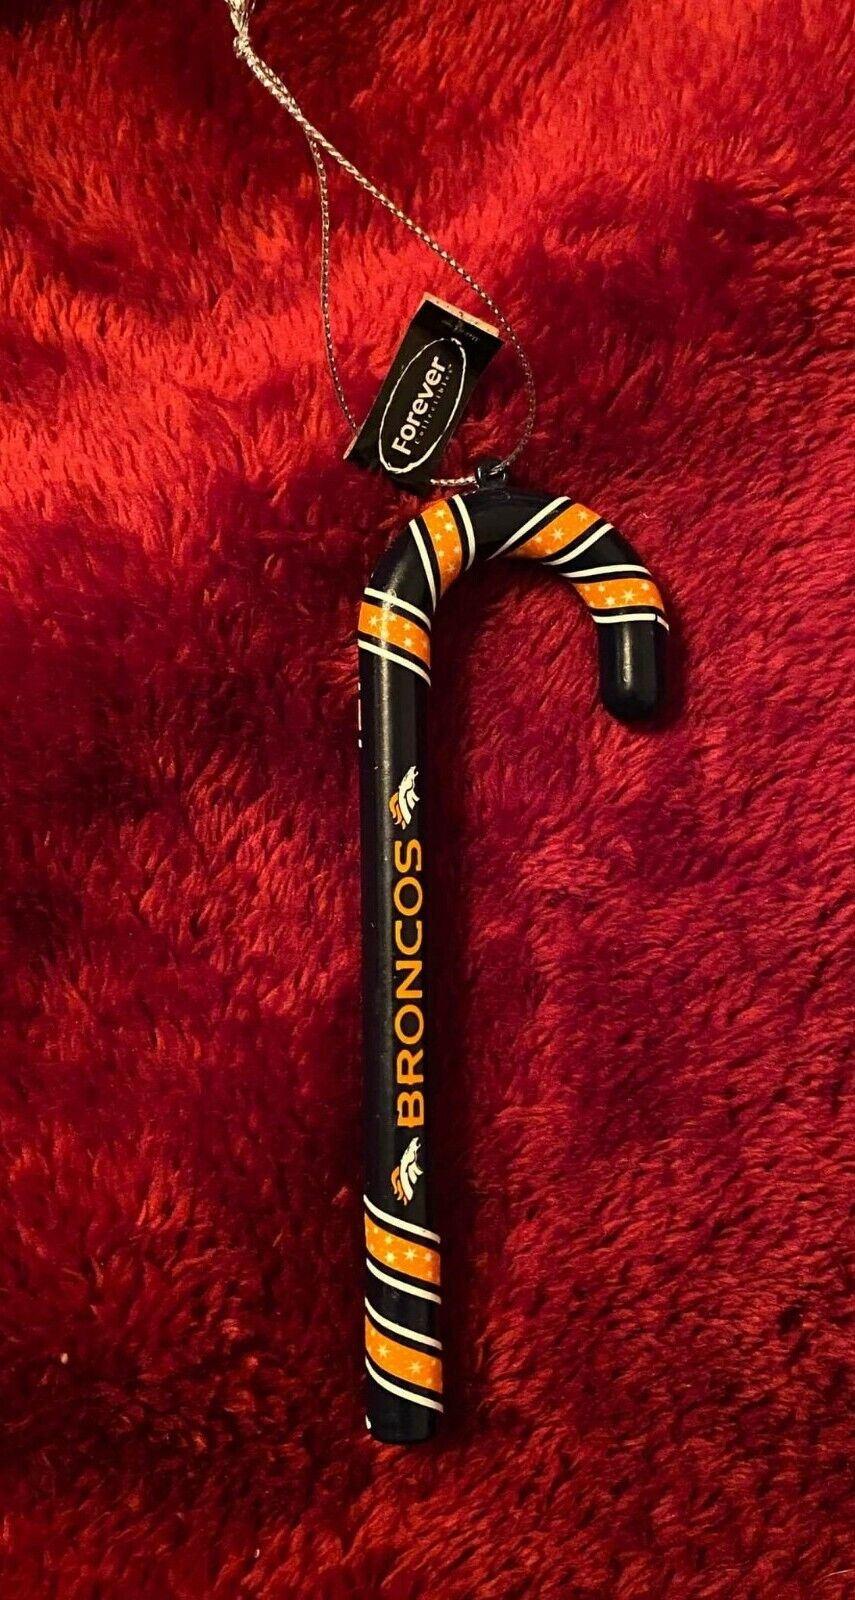 Rare Denver Broncos candy cane ornament collectible NFL